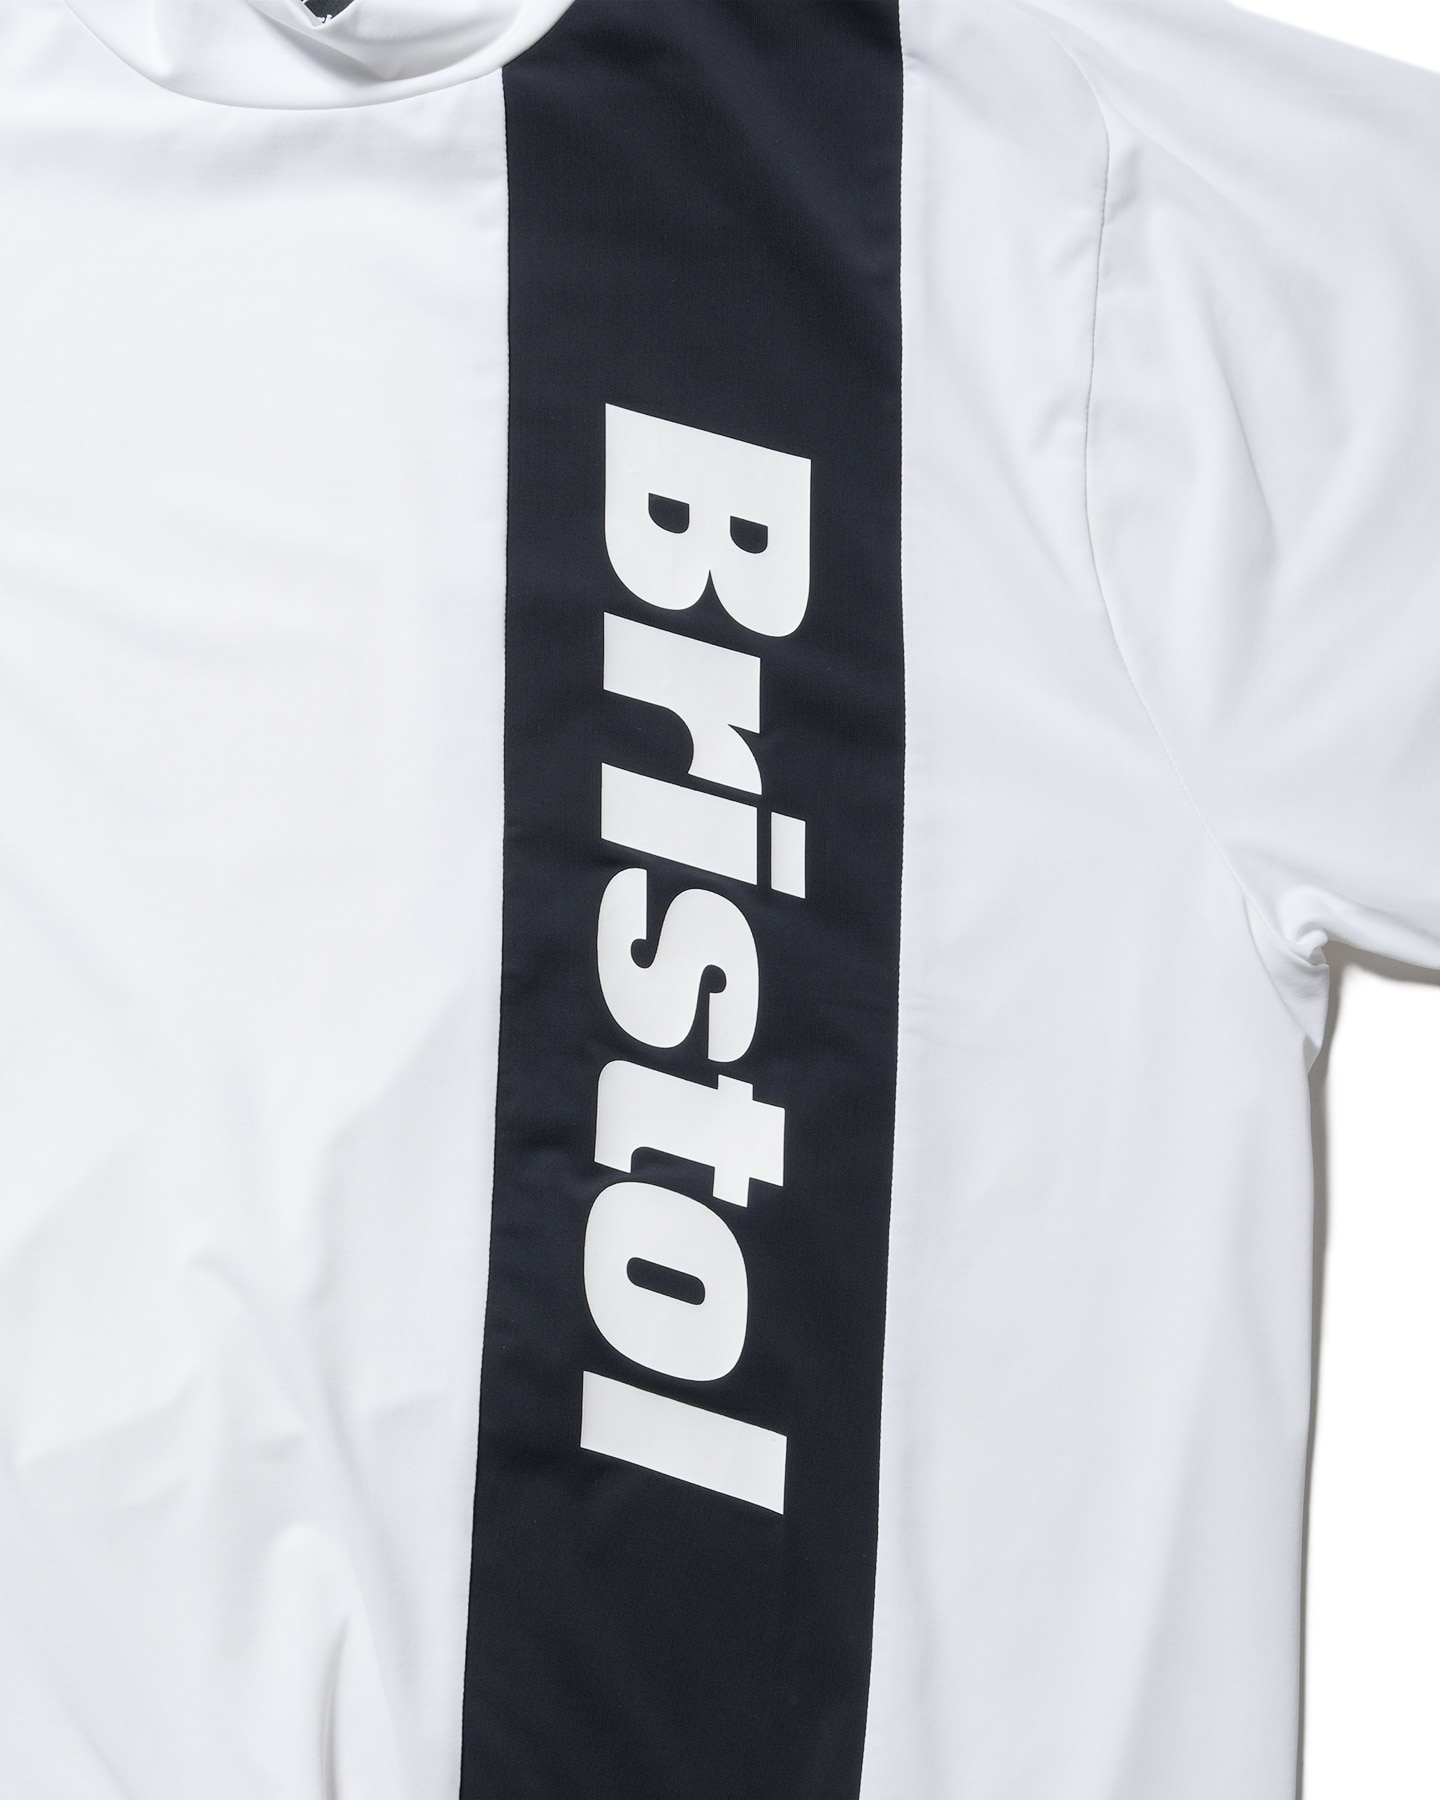 F.C.Real Bristol MOCK NECK LIGHT BLUE XL Tシャツ/カットソー(半袖/袖なし) 新品/送料無料